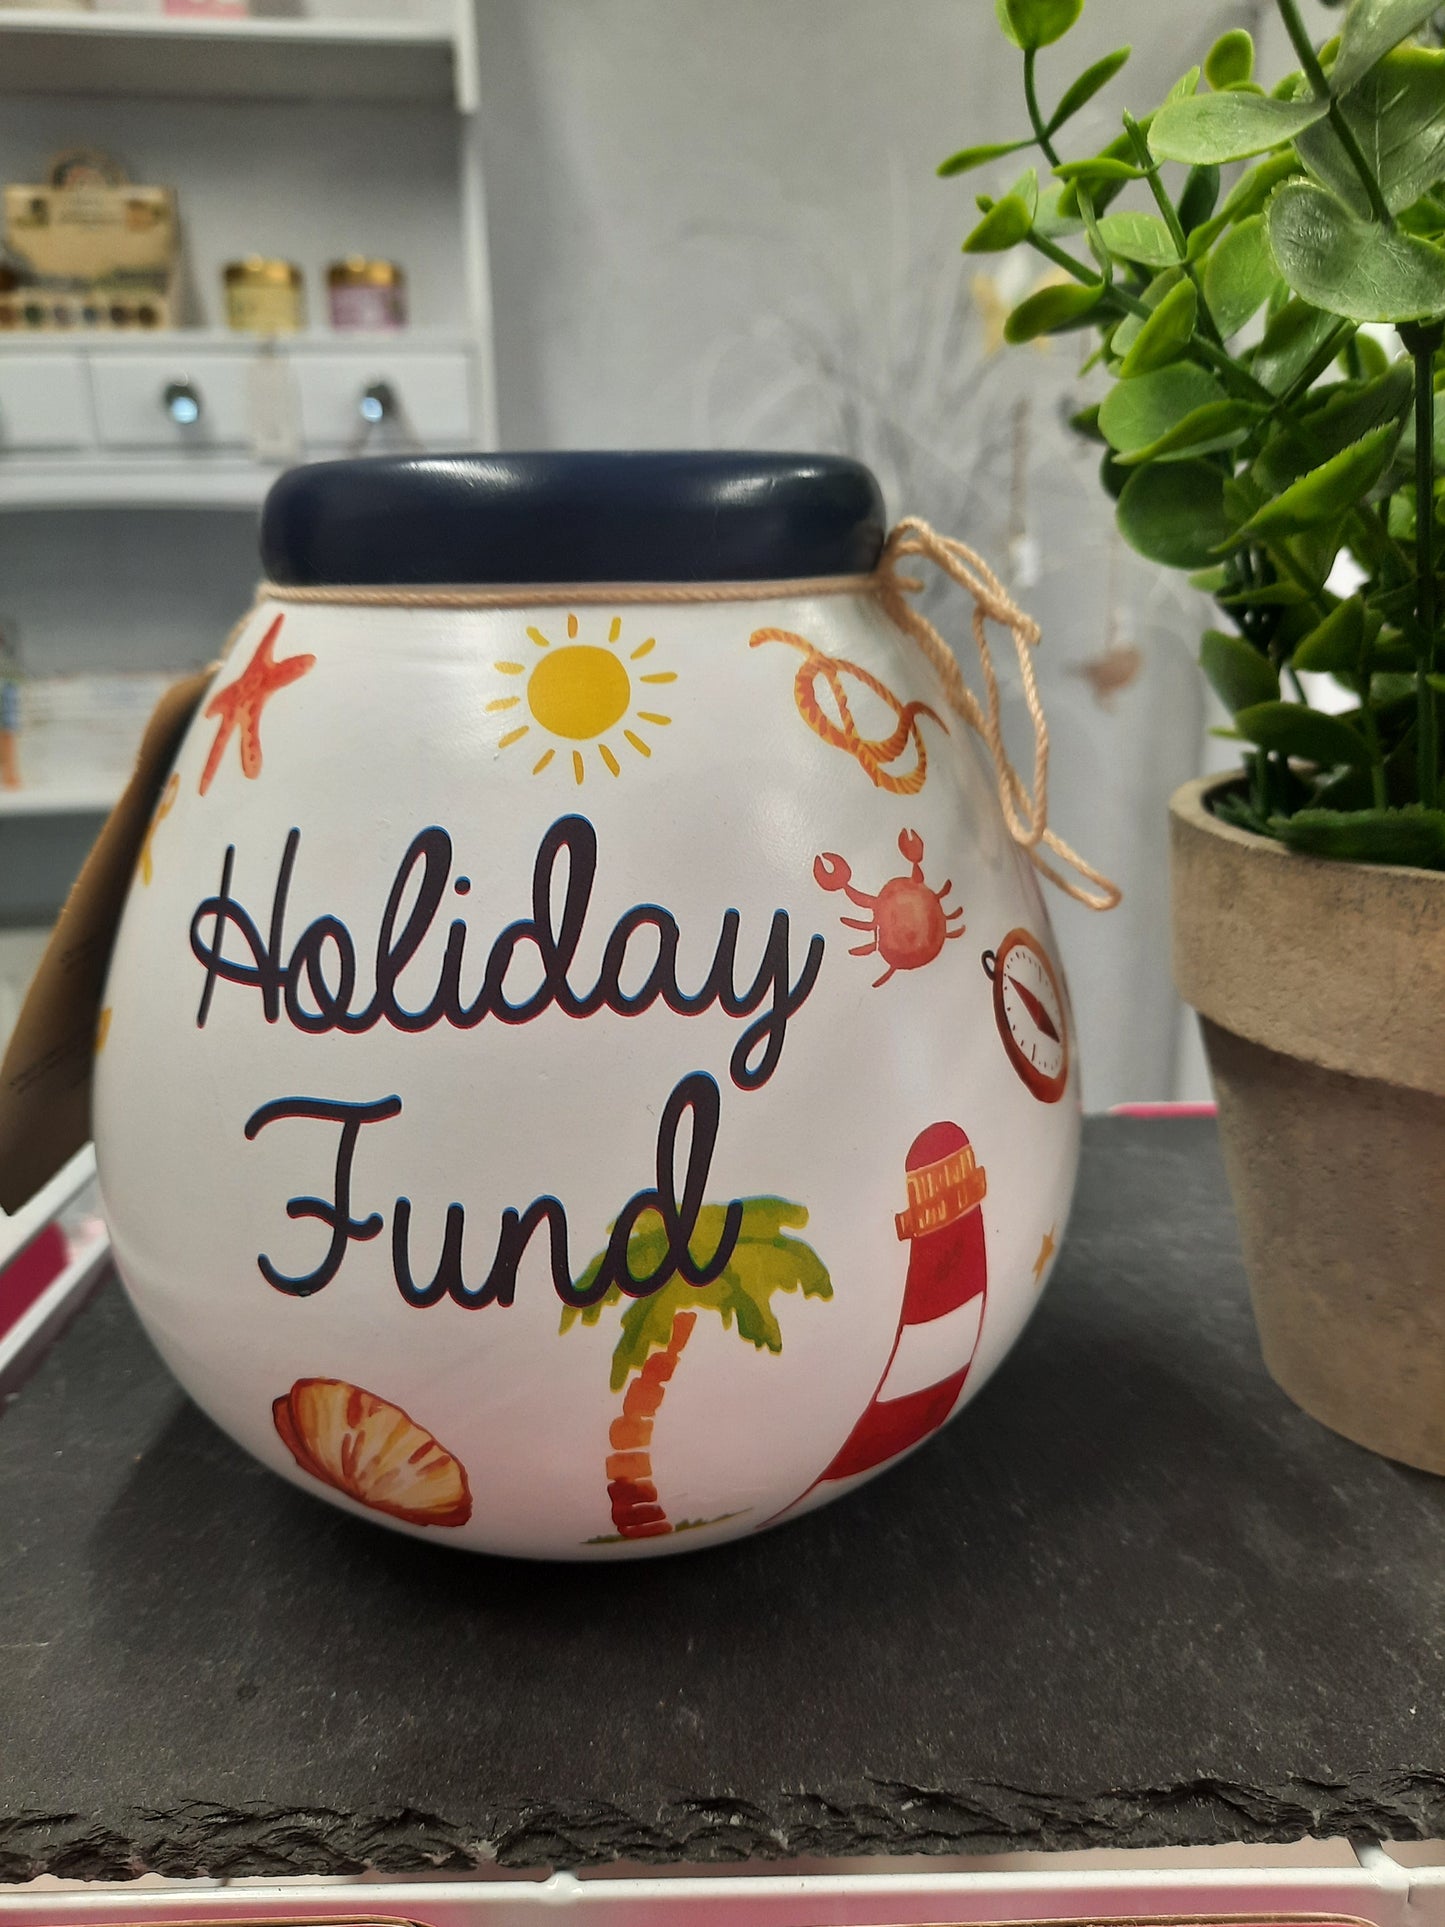 Pot of Dreams Holiday Fund